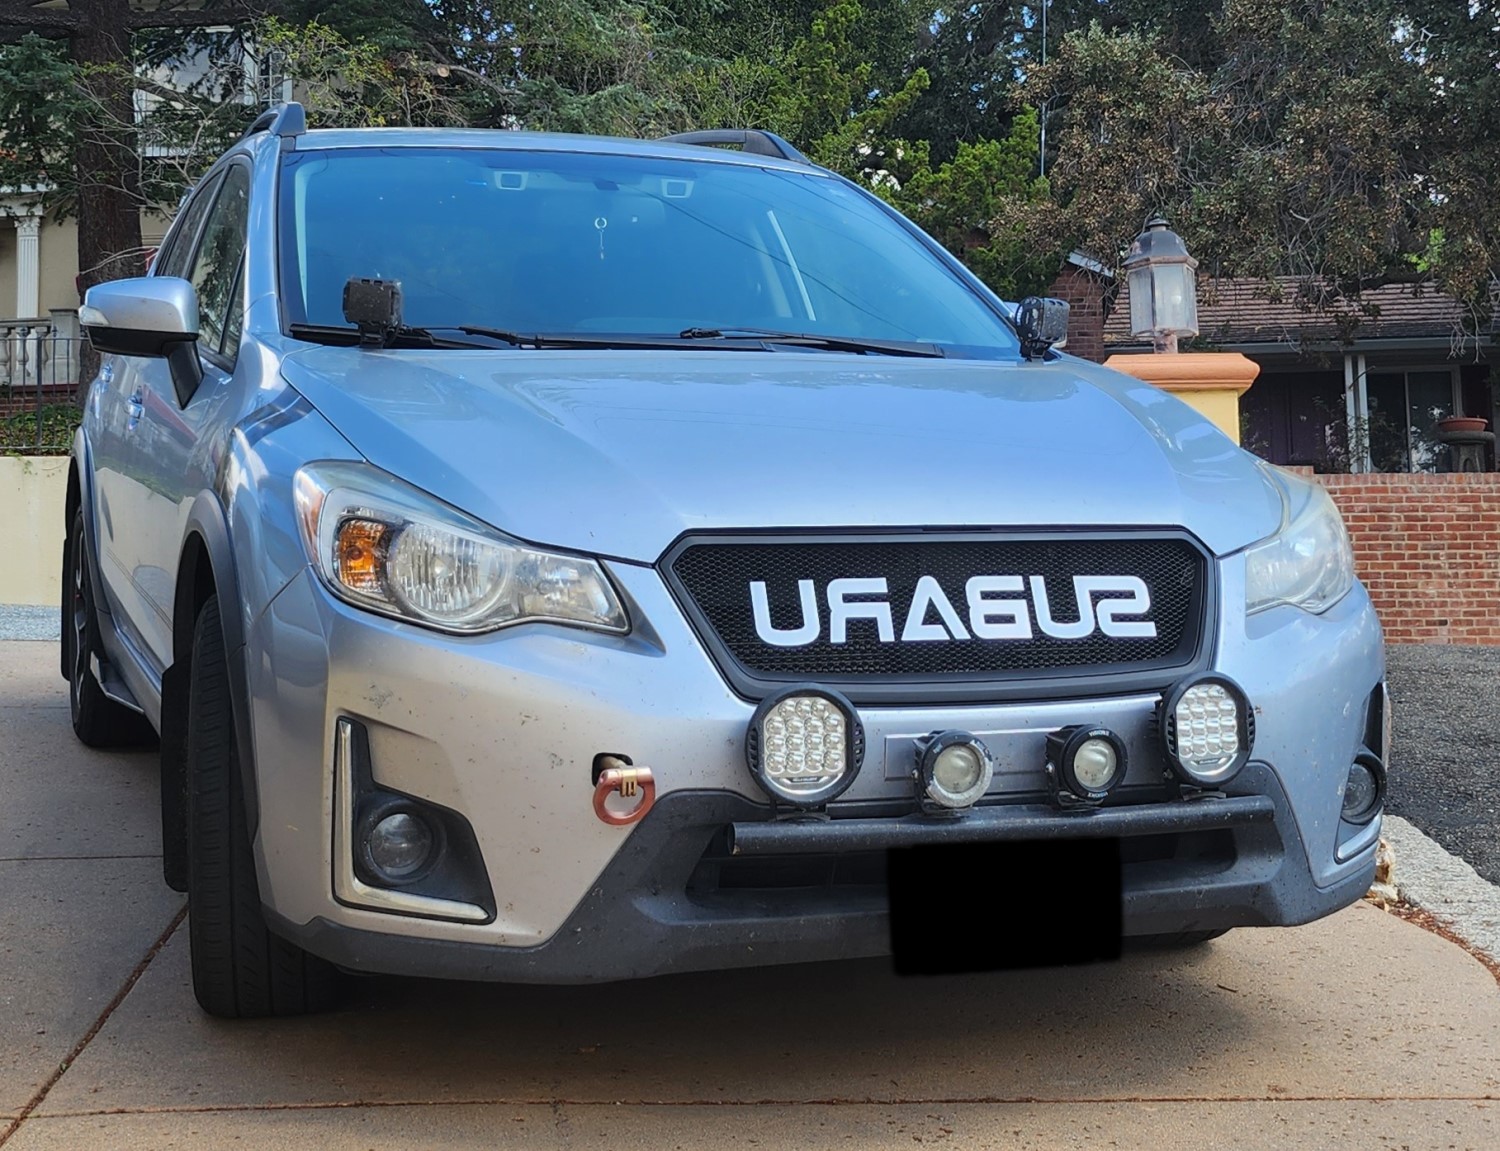 Backwards Style: Unique Grille Upgrade for 2013 Subaru Crosstrek